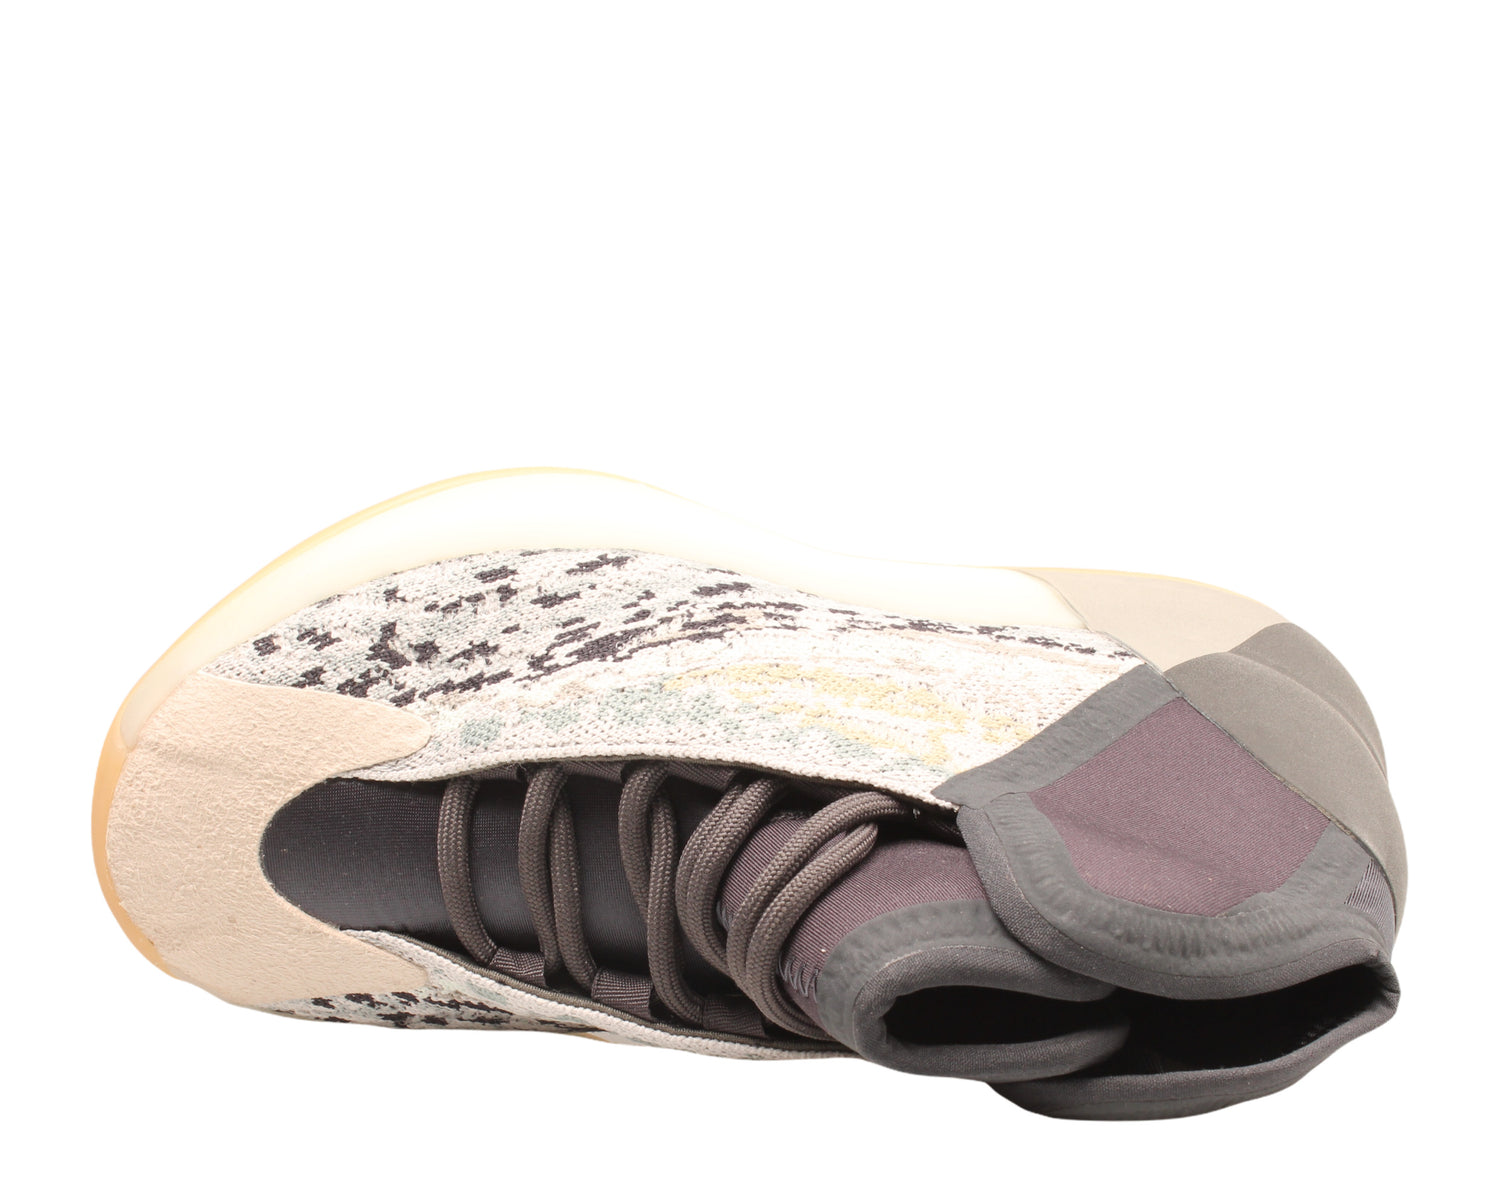 Adidas Yeezy Quantum Men's Shoes